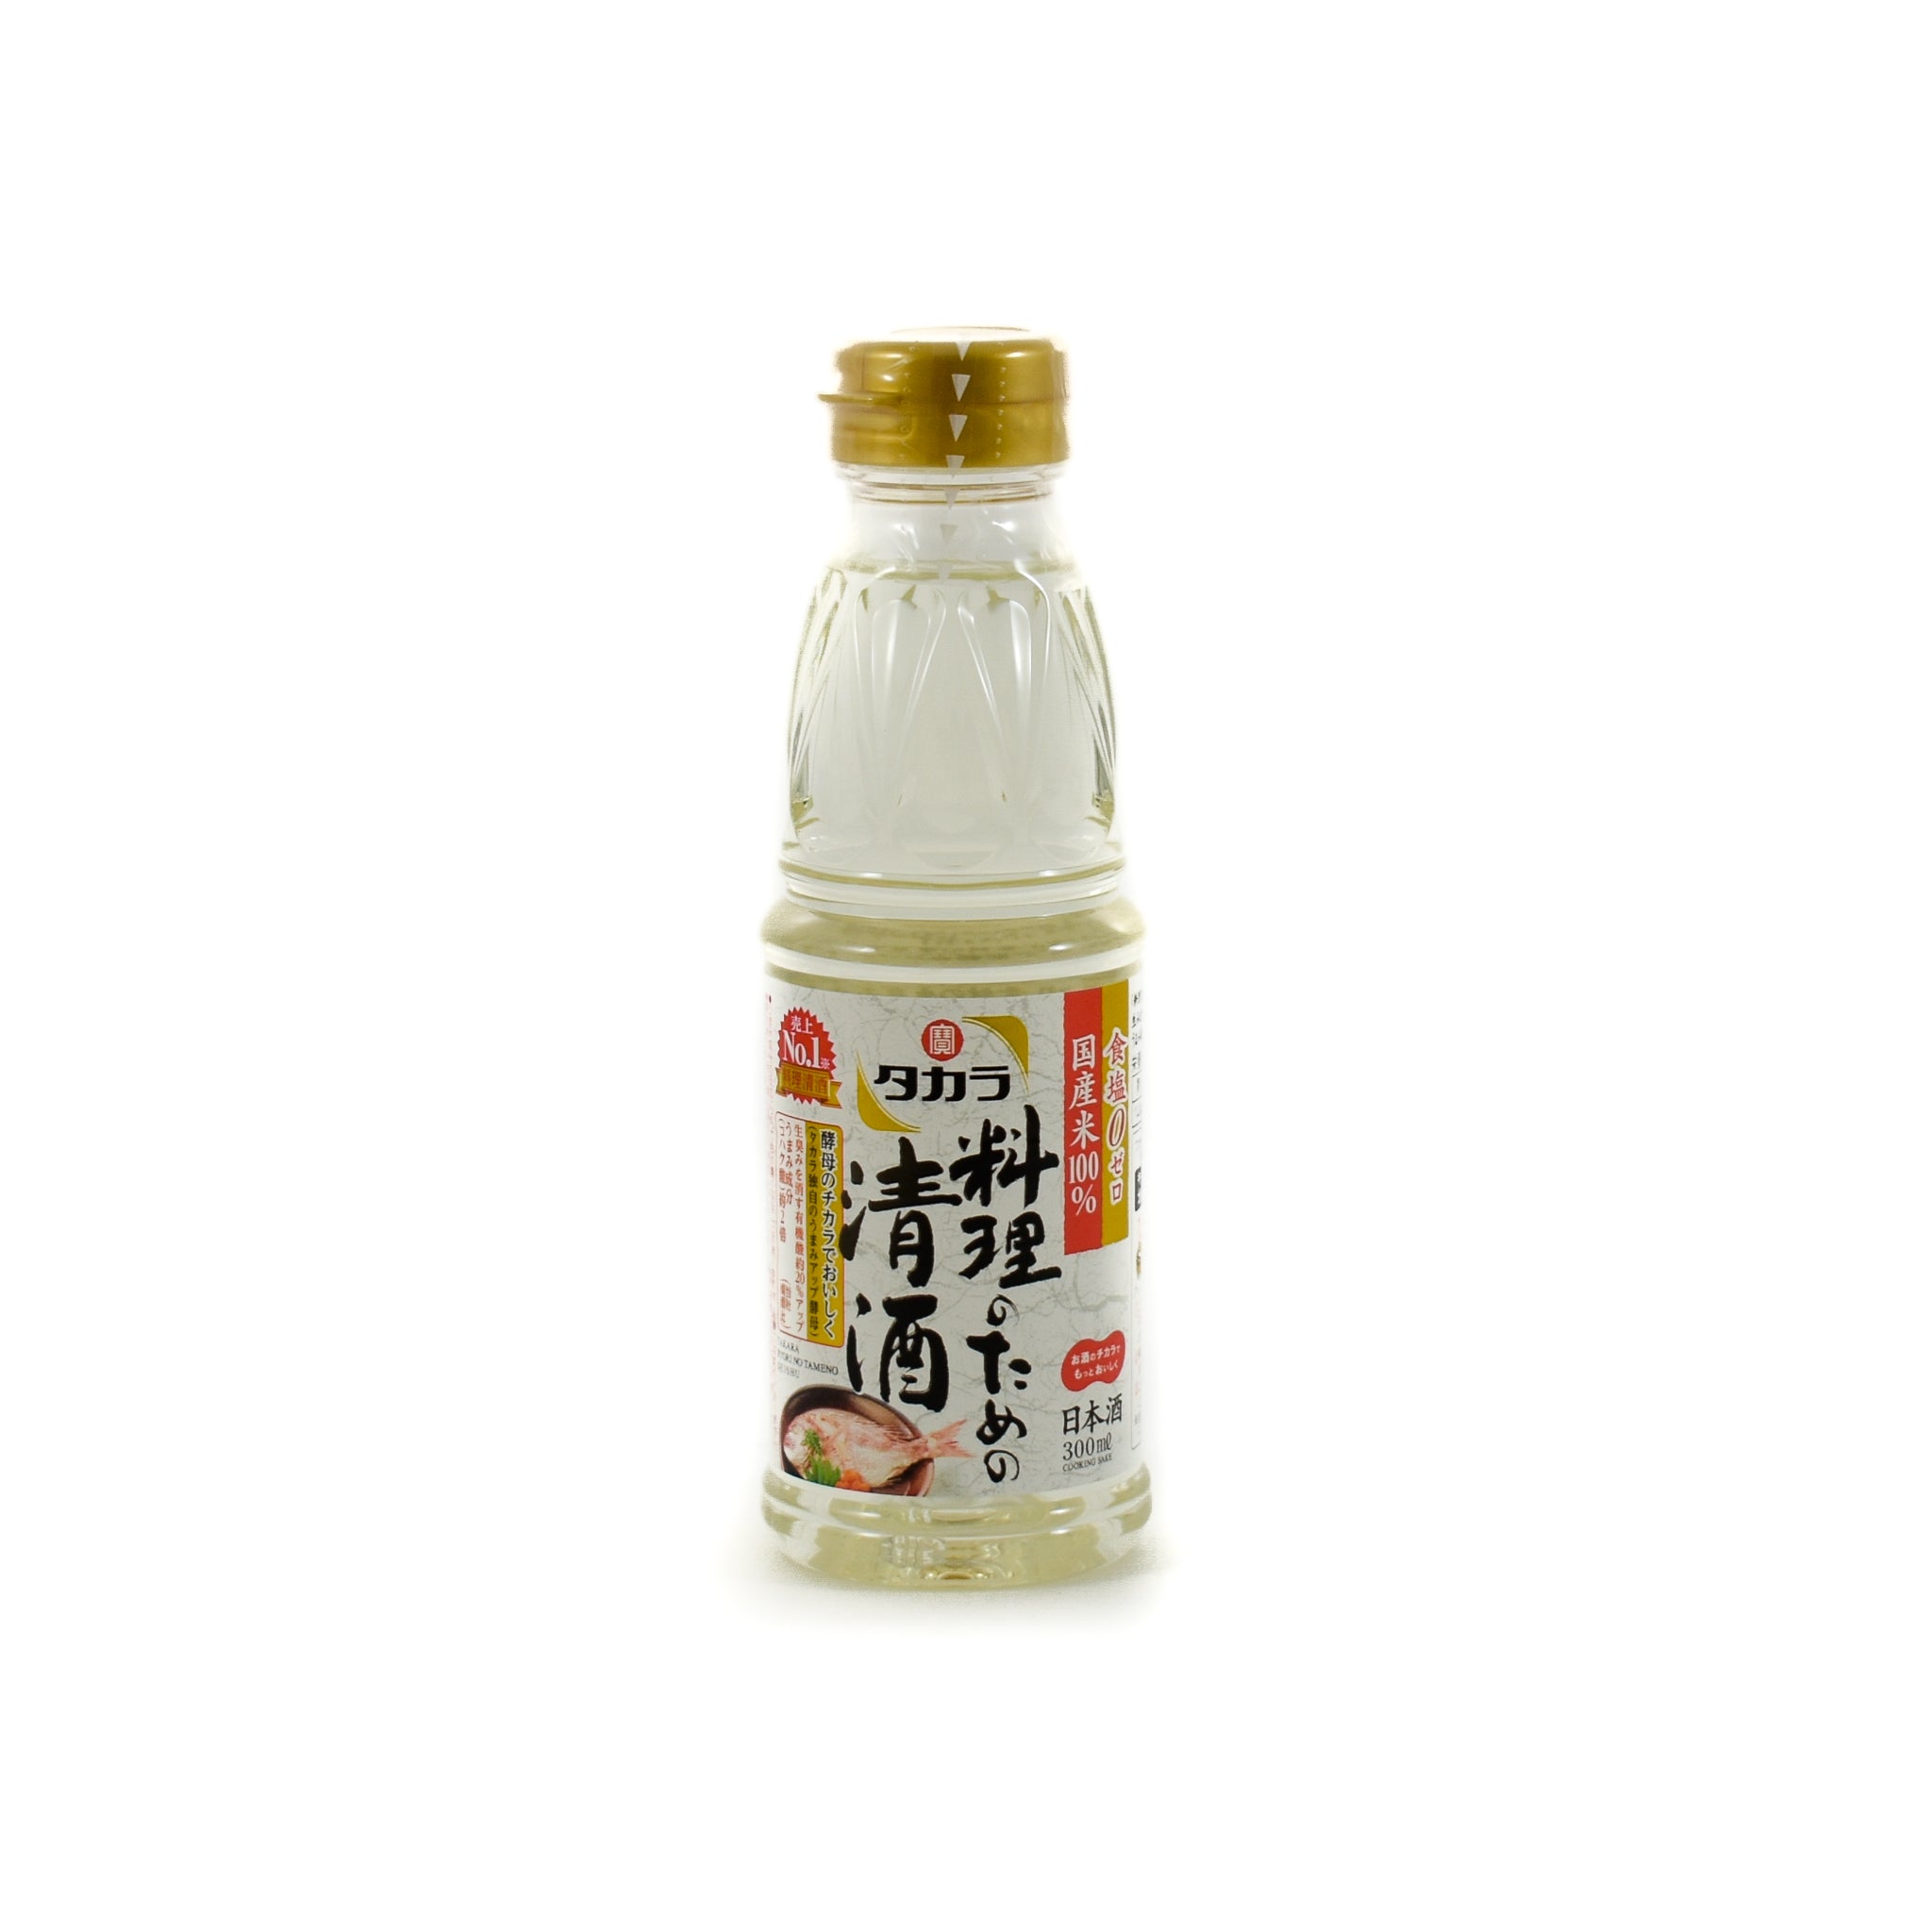 Takara Cooking Sake – Ryori Shu 13-14%, 300ml